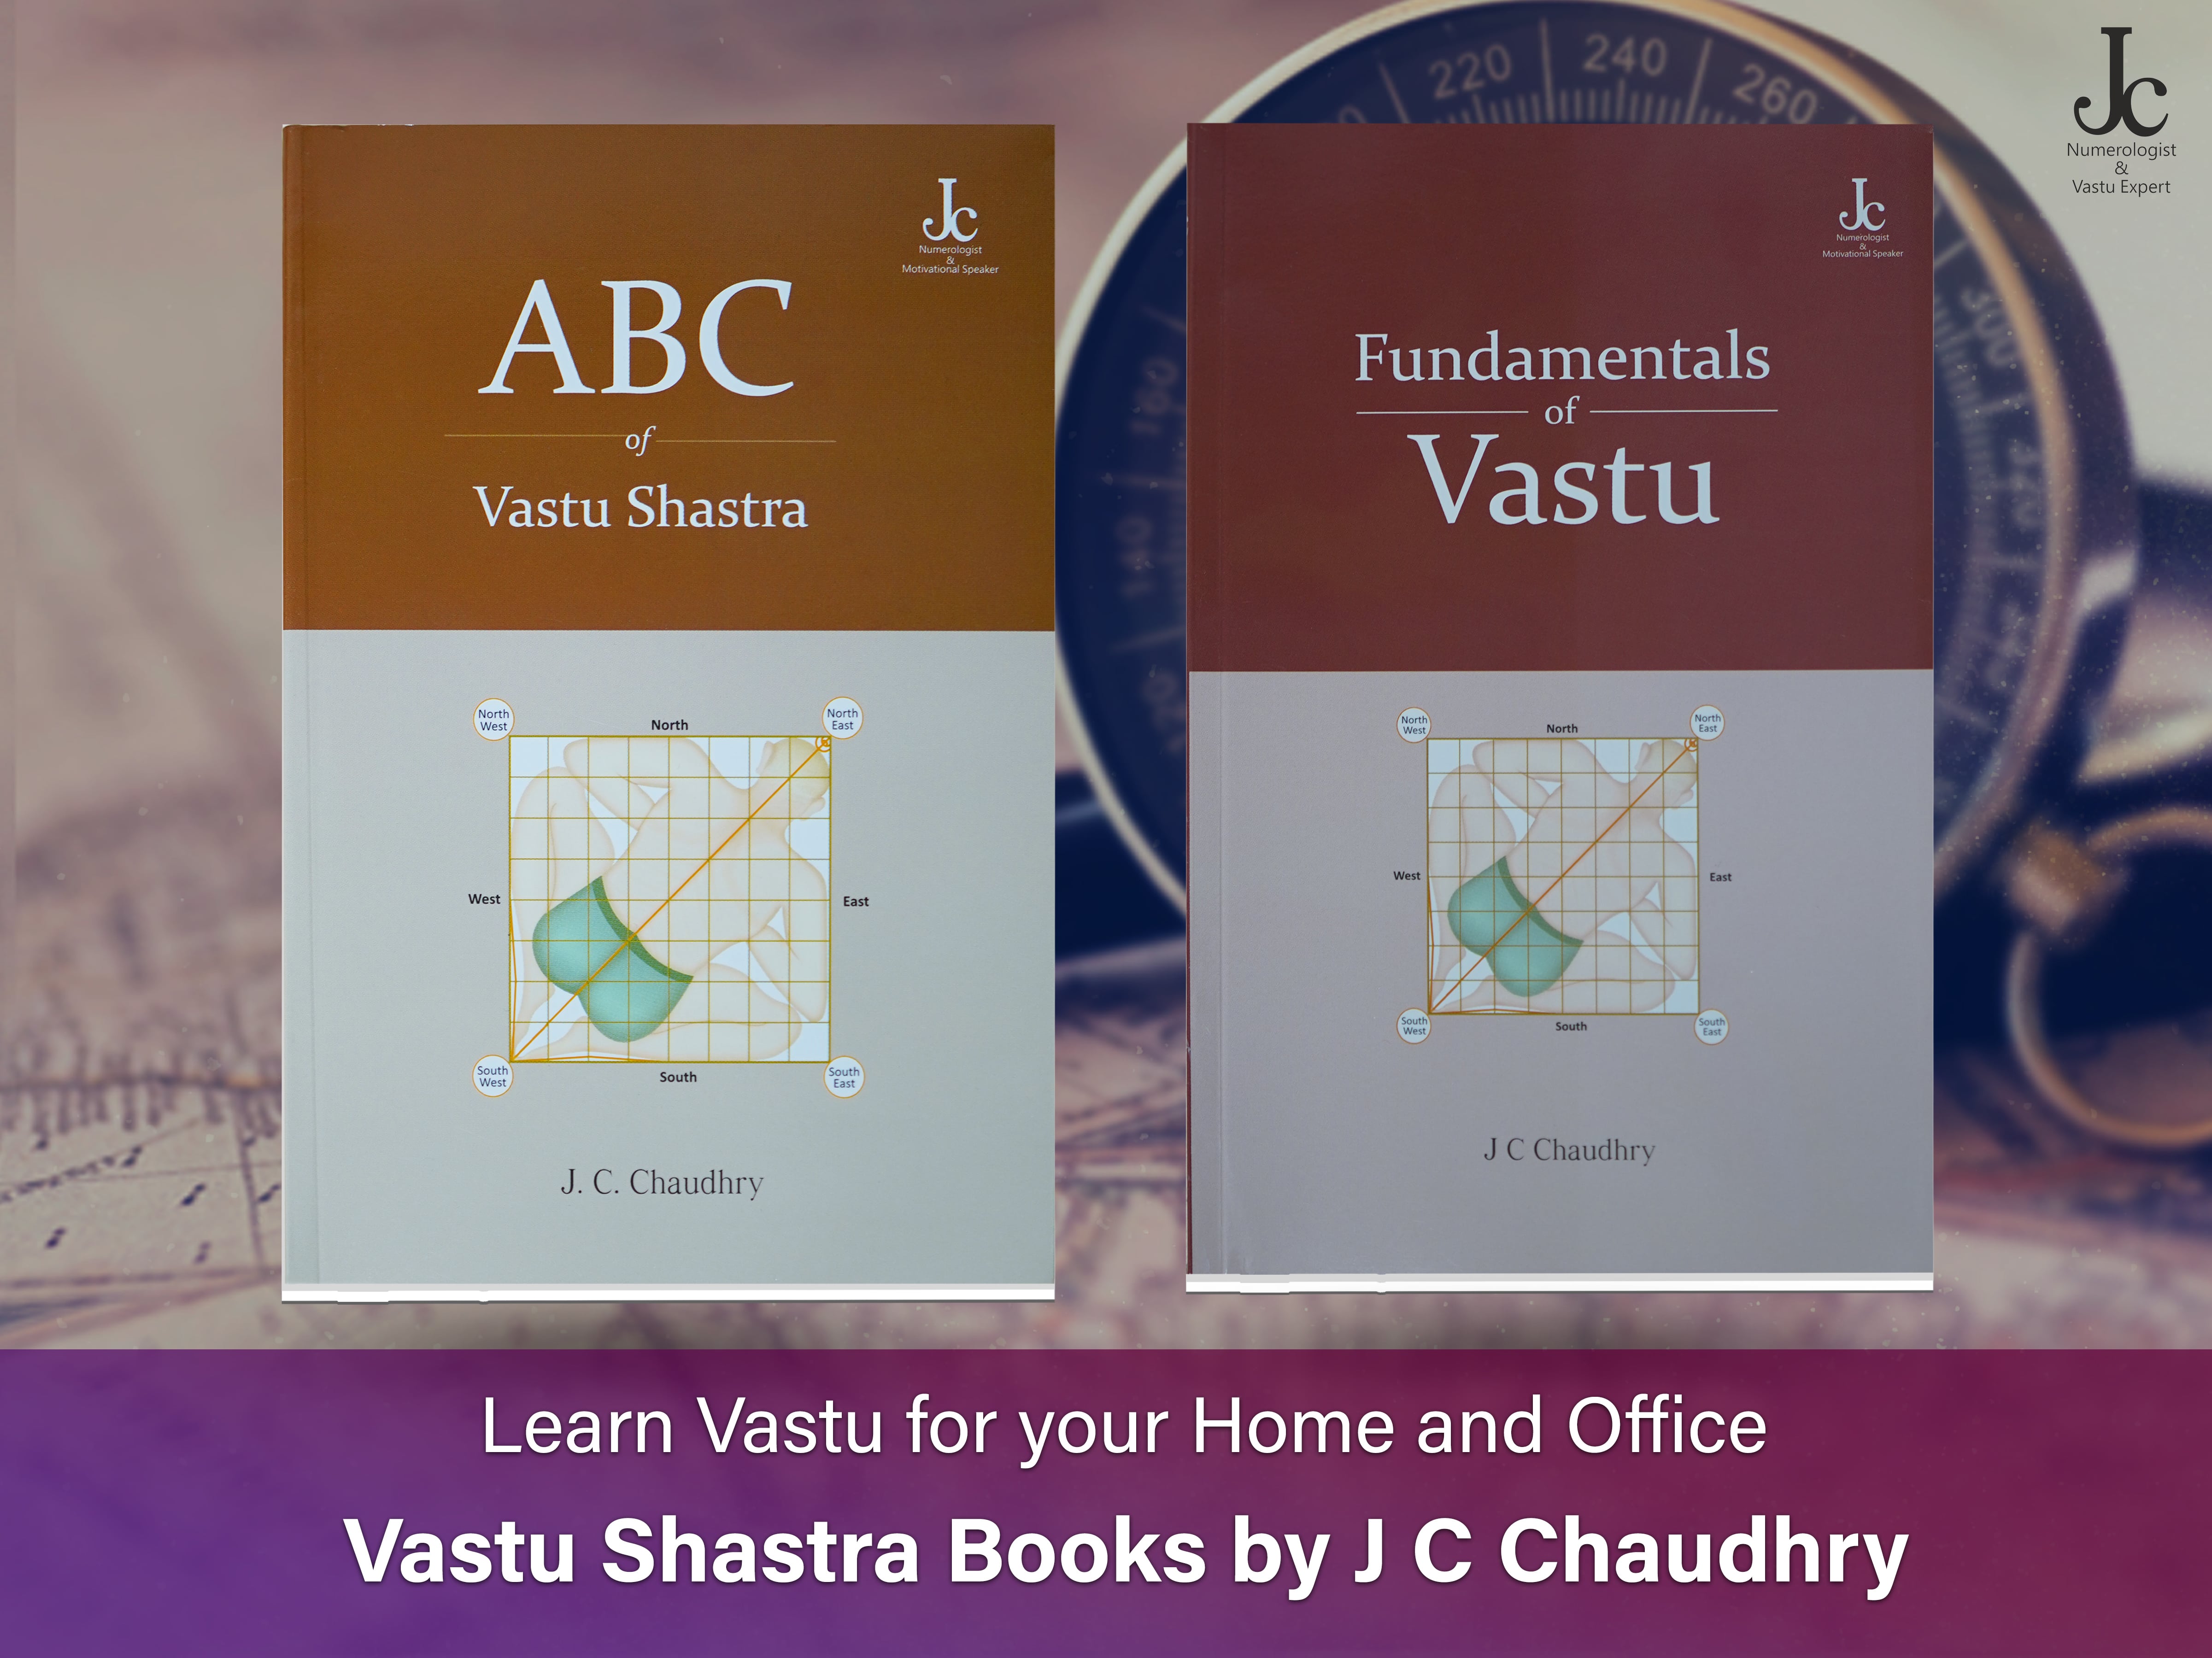 Vastu books by Mr J C Chaudhry 